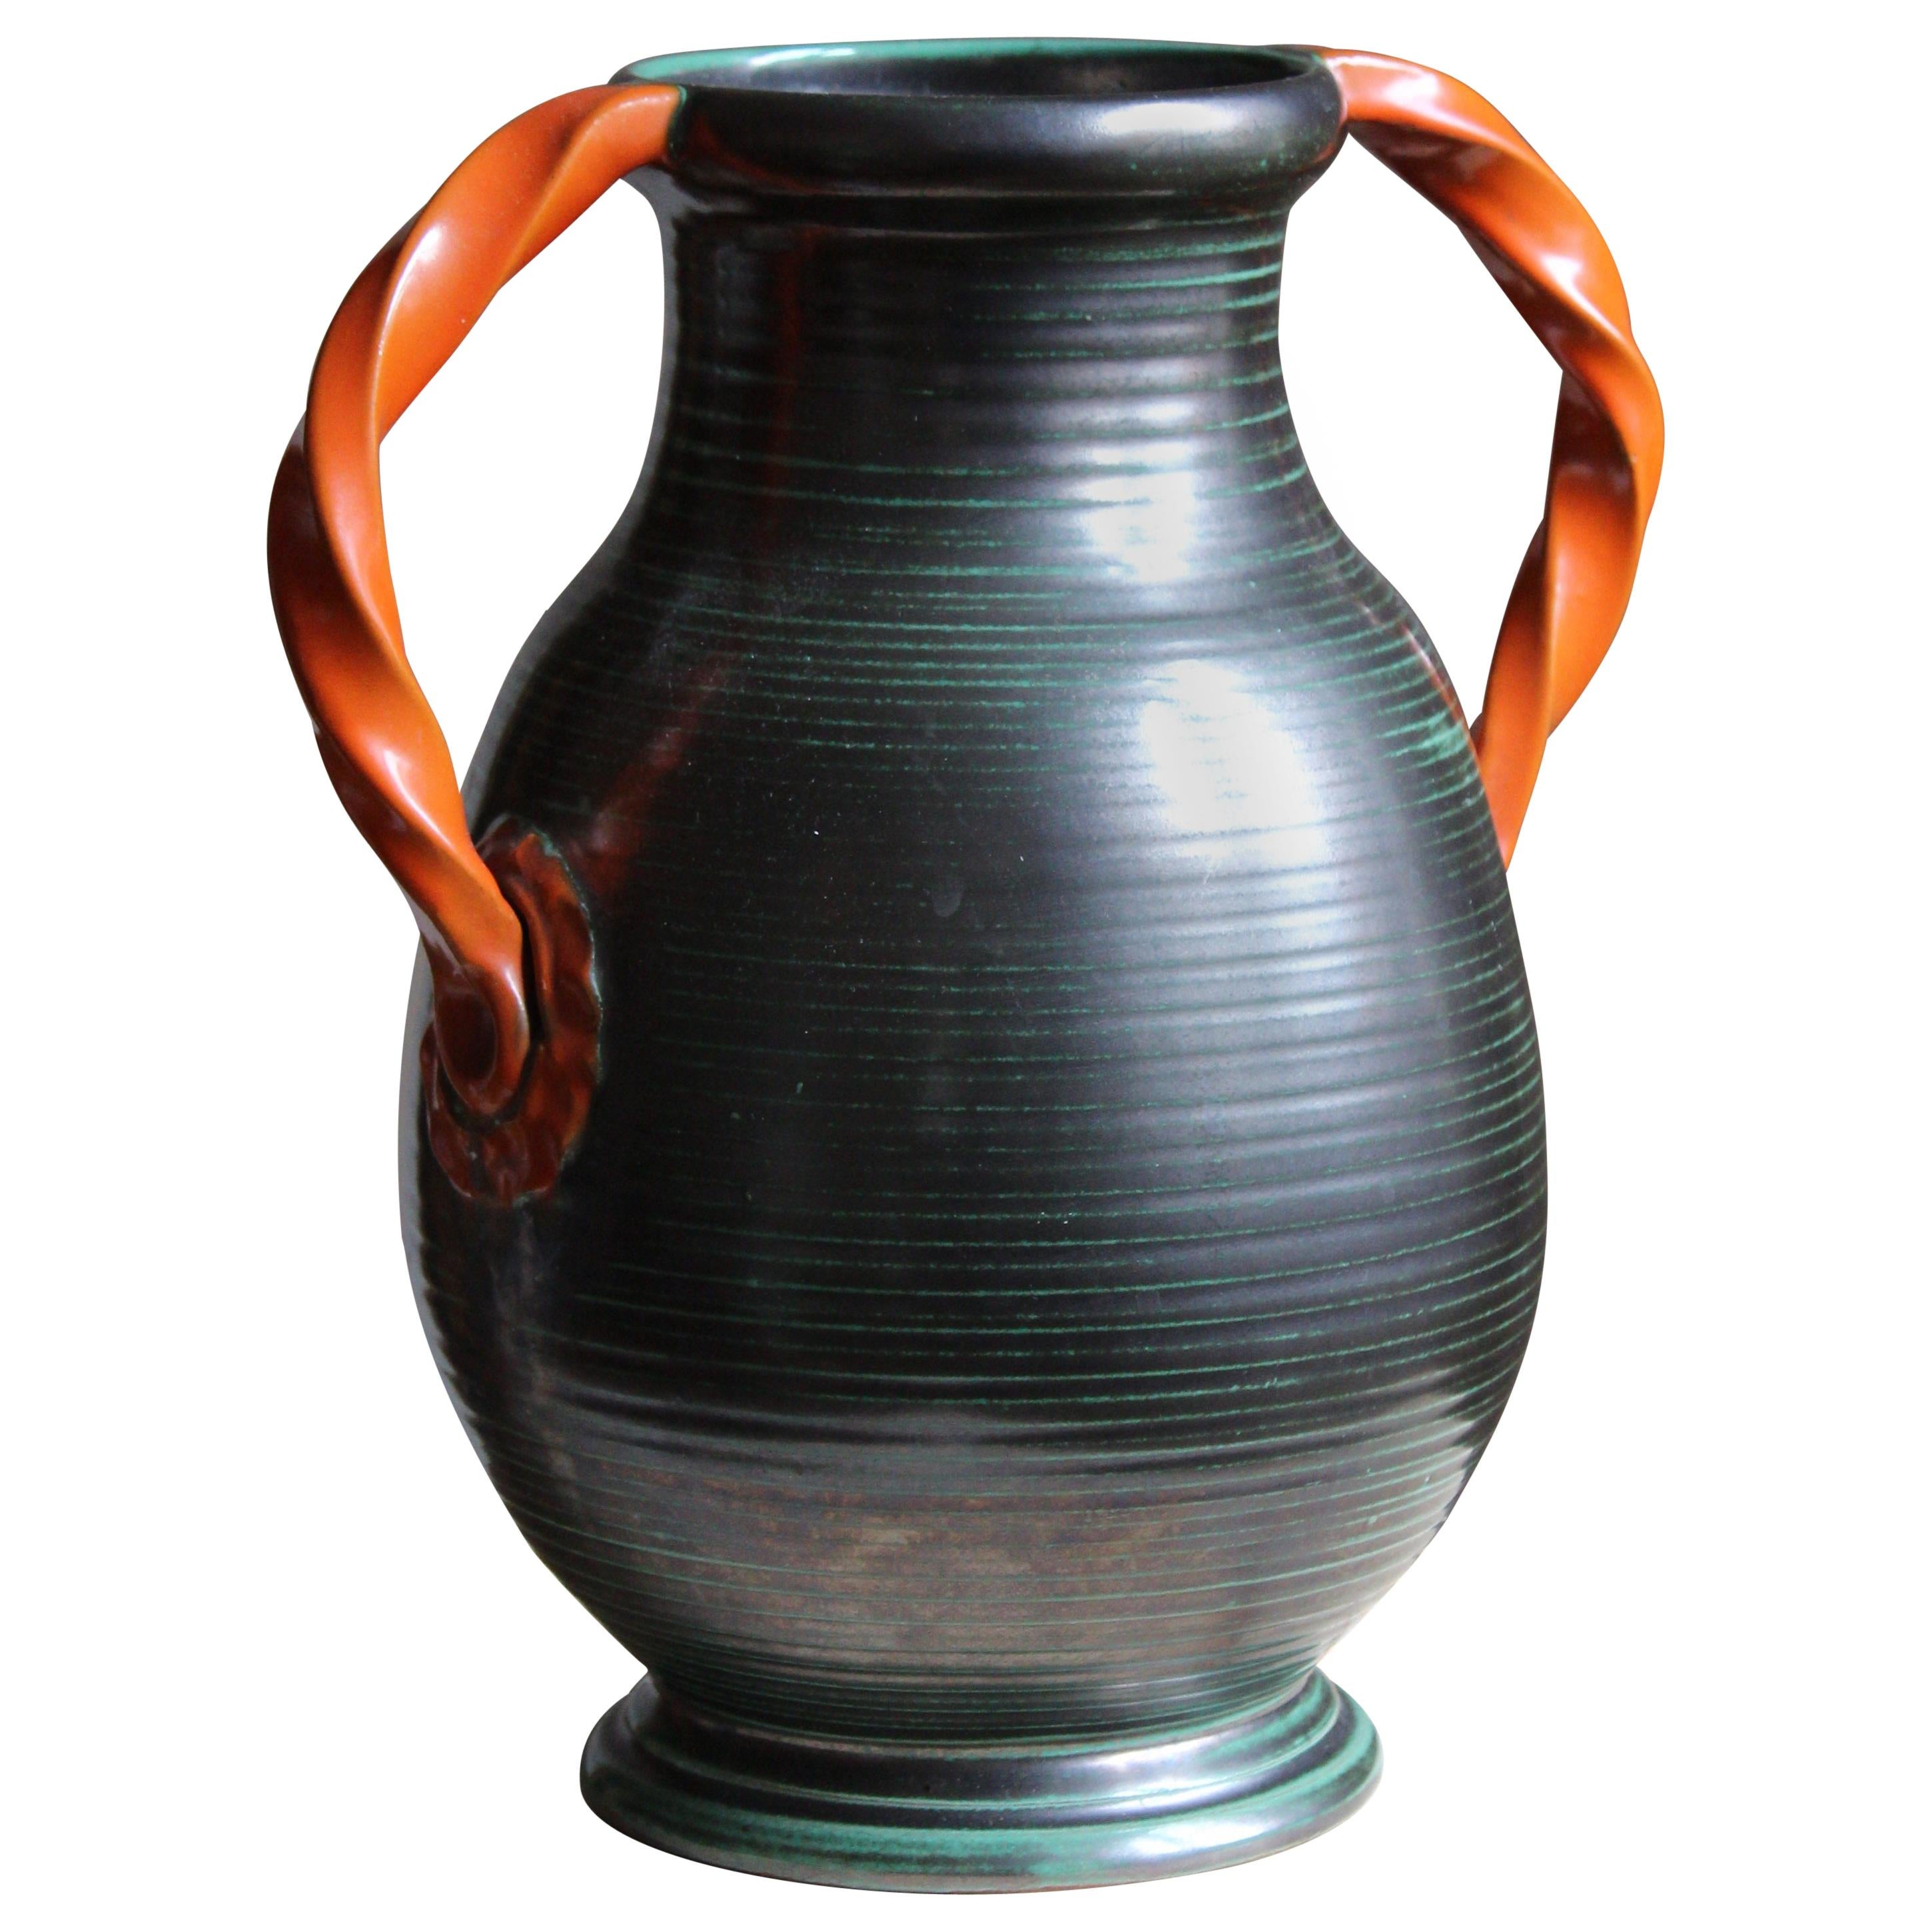 Upsala-Ekeby, Vase / Vessel, Orange and Green Glazed Stoneware, Sweden, 1930s